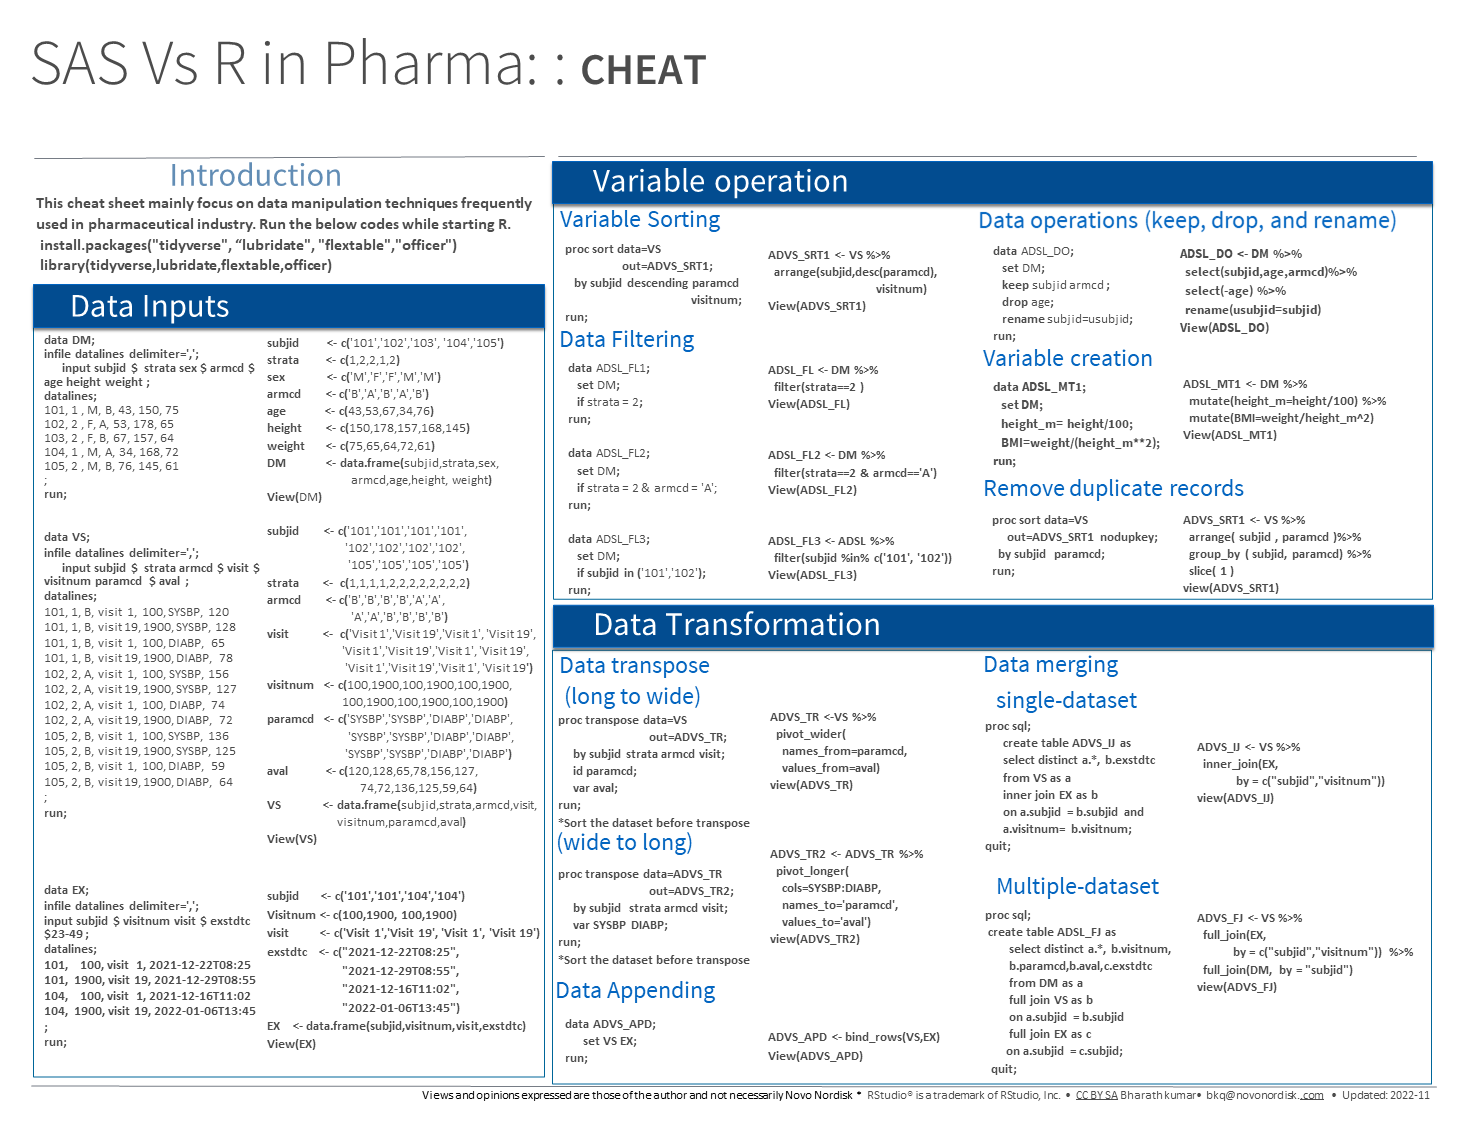 Download SAS vs. R in Pharma cheatsheet